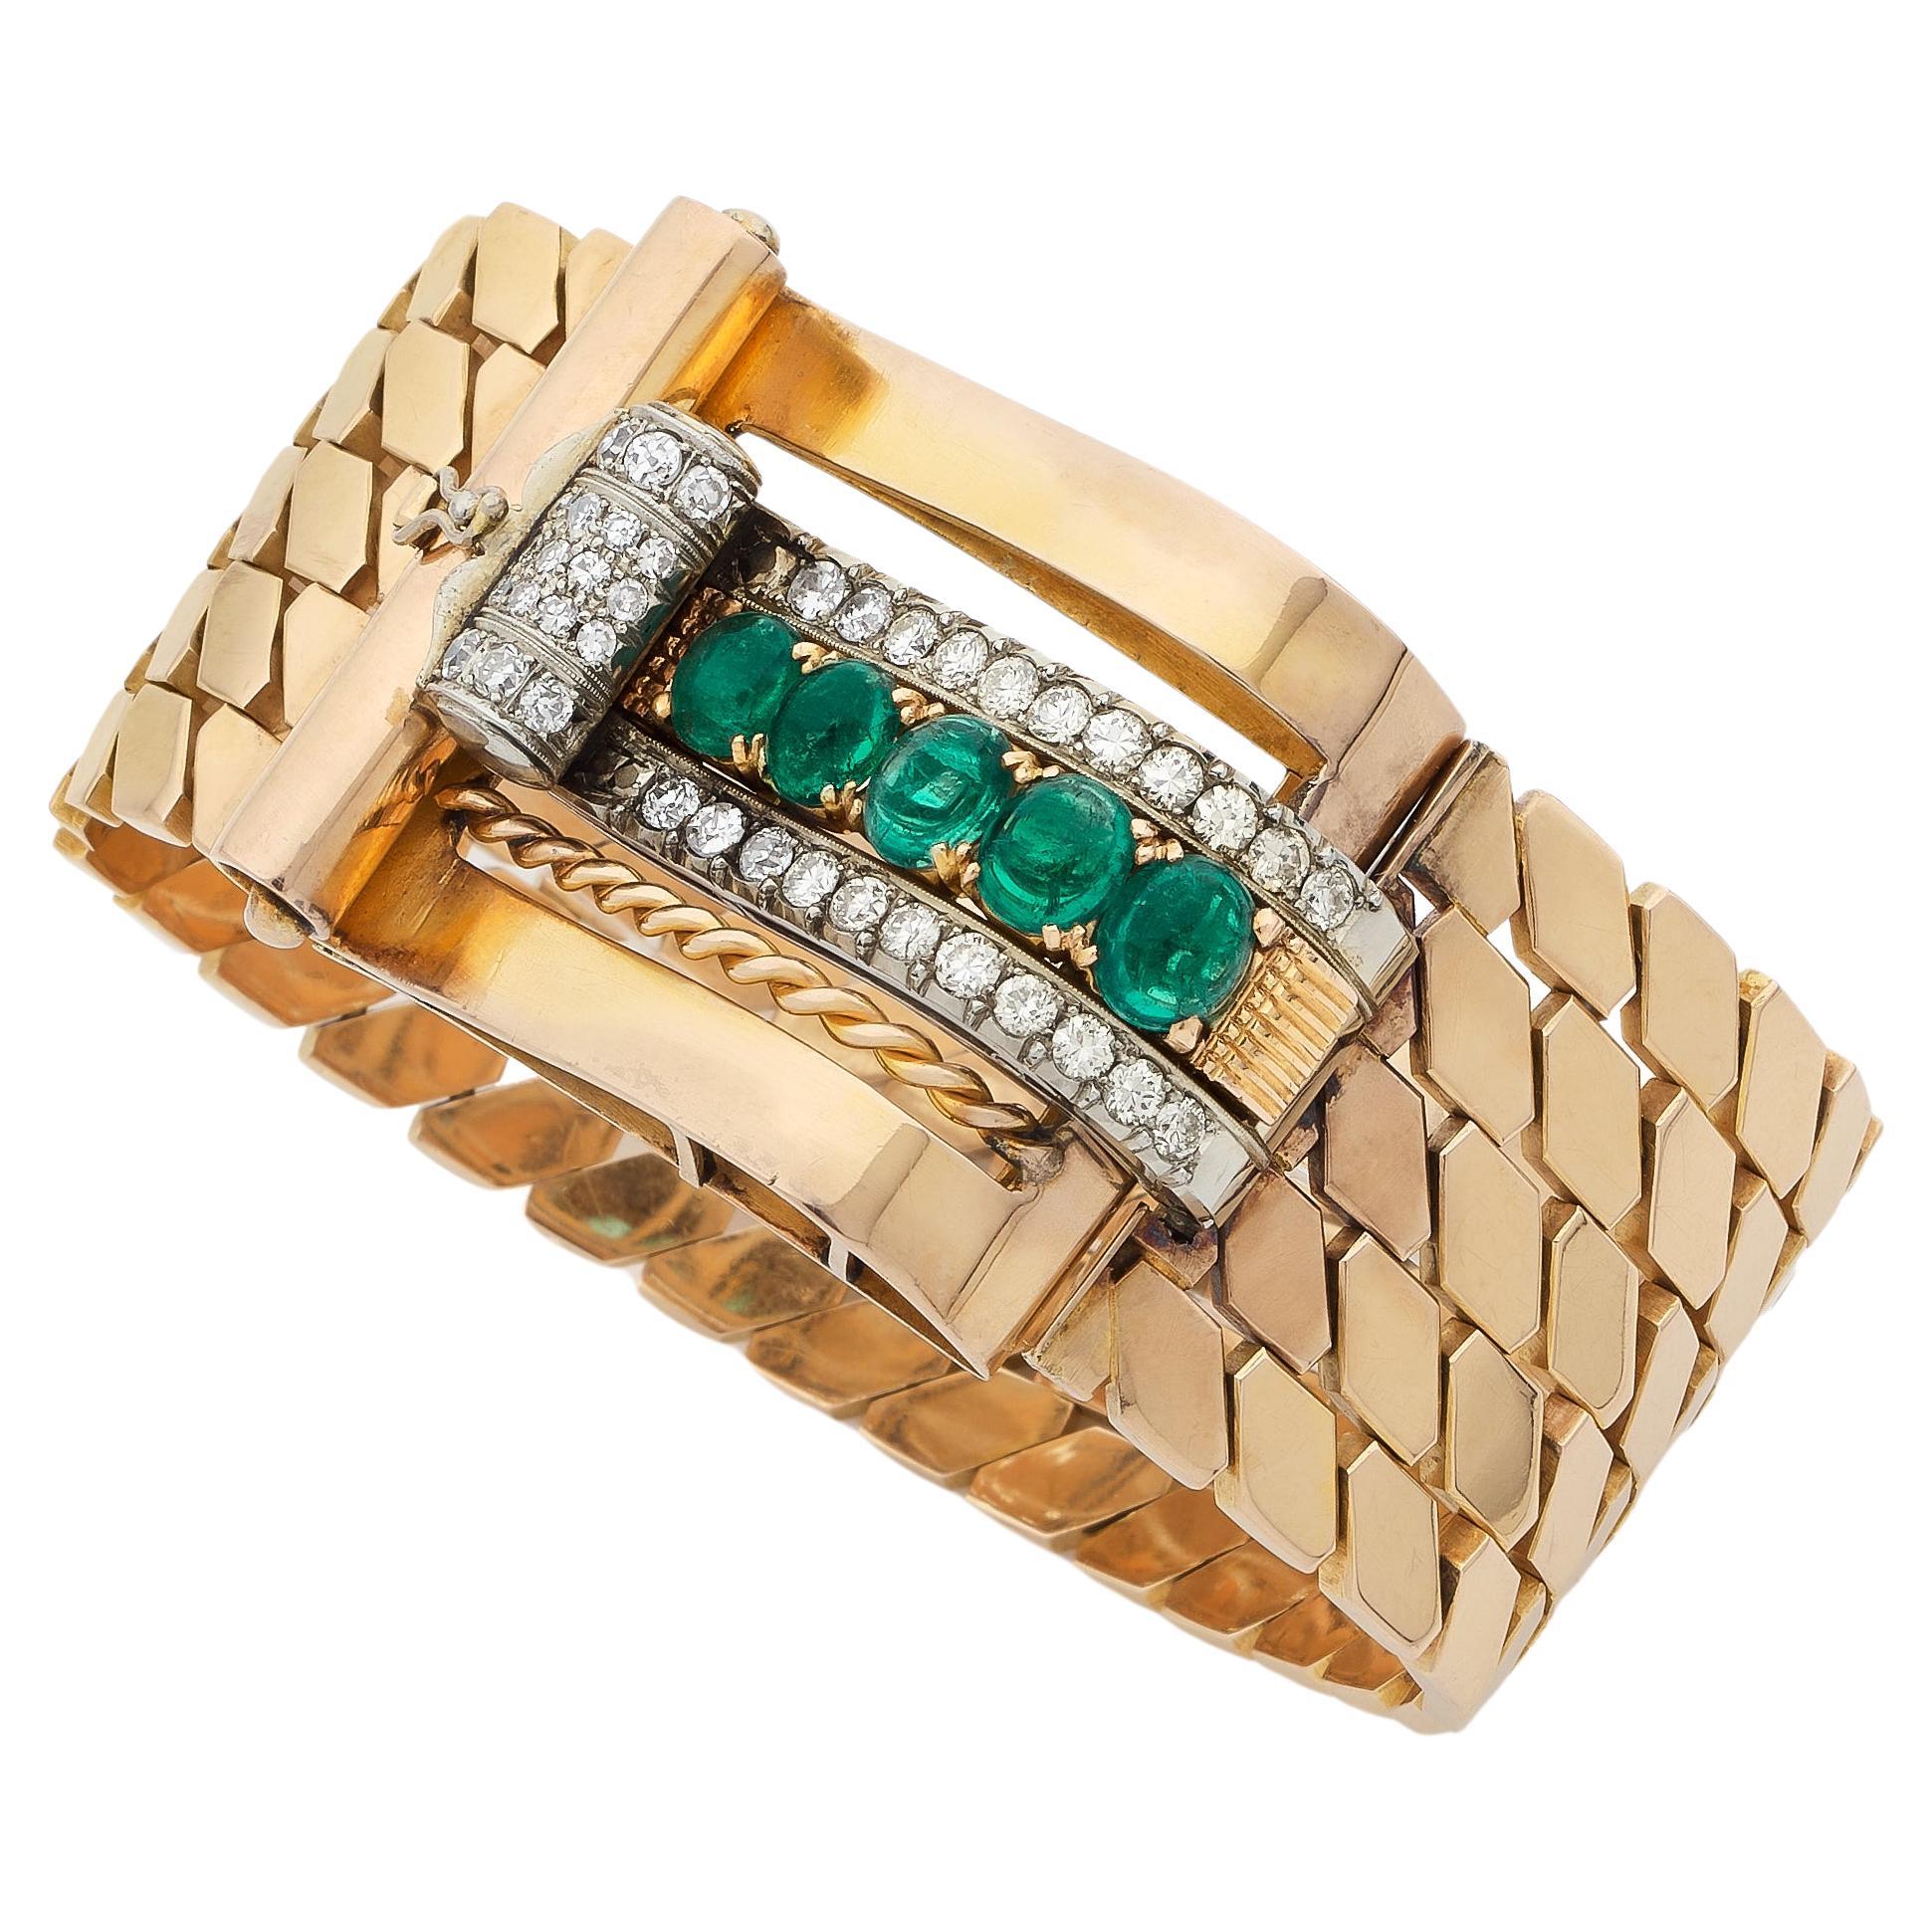 Spectacular Retro Bracelet with Emeralds and Diamonds